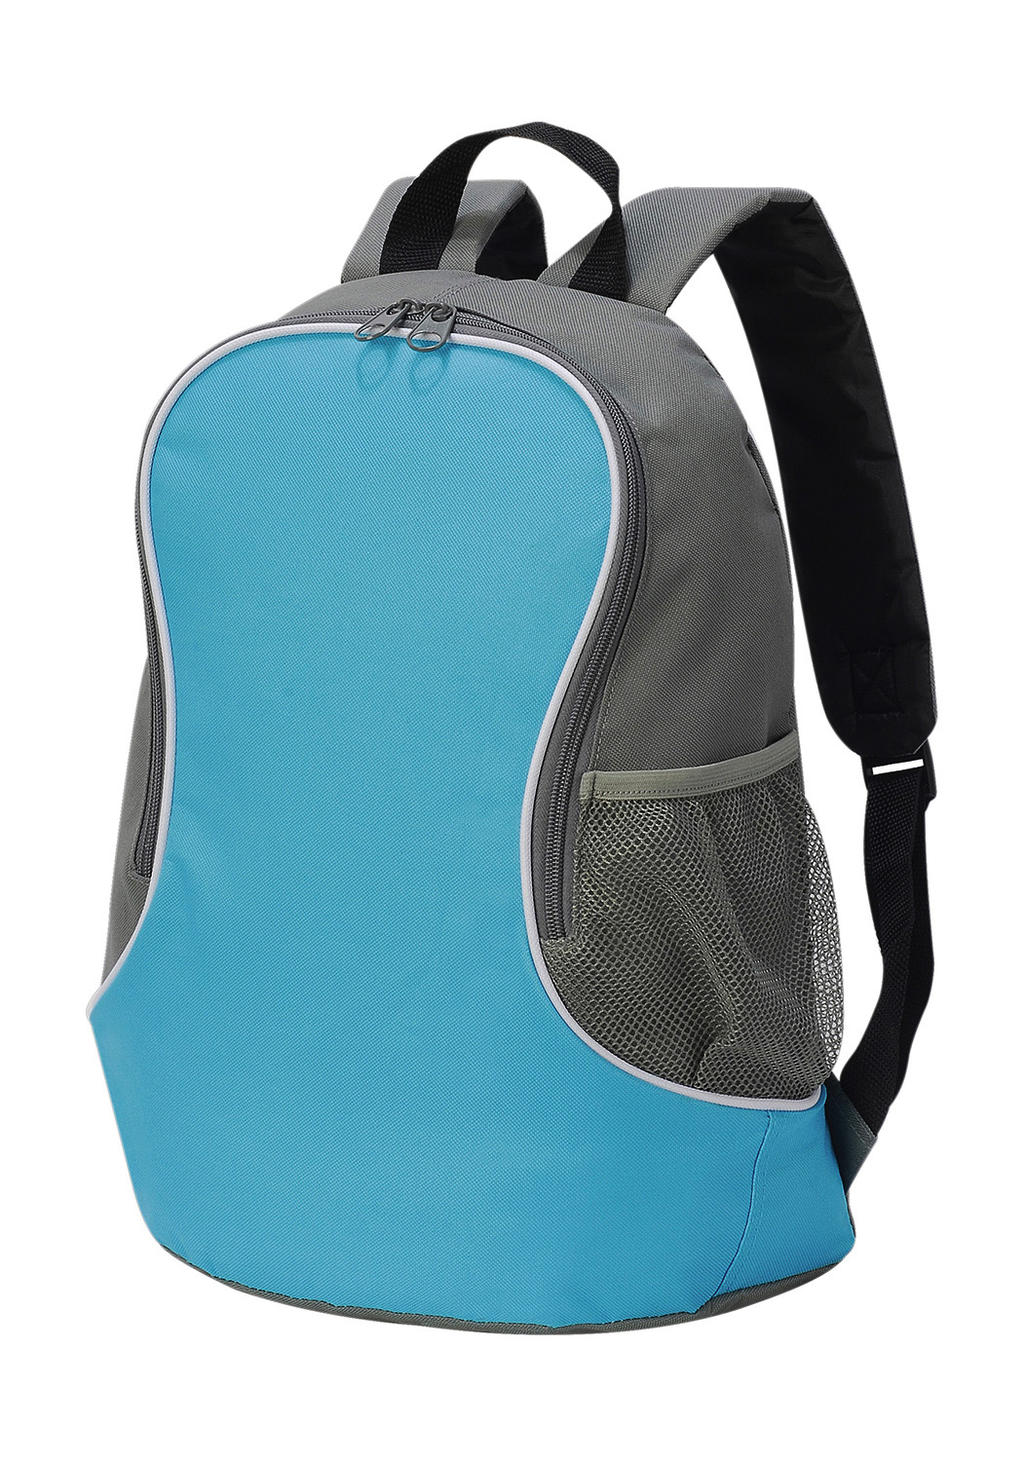  Fuji Basic Backpack in Farbe Light Blue/Dark Grey